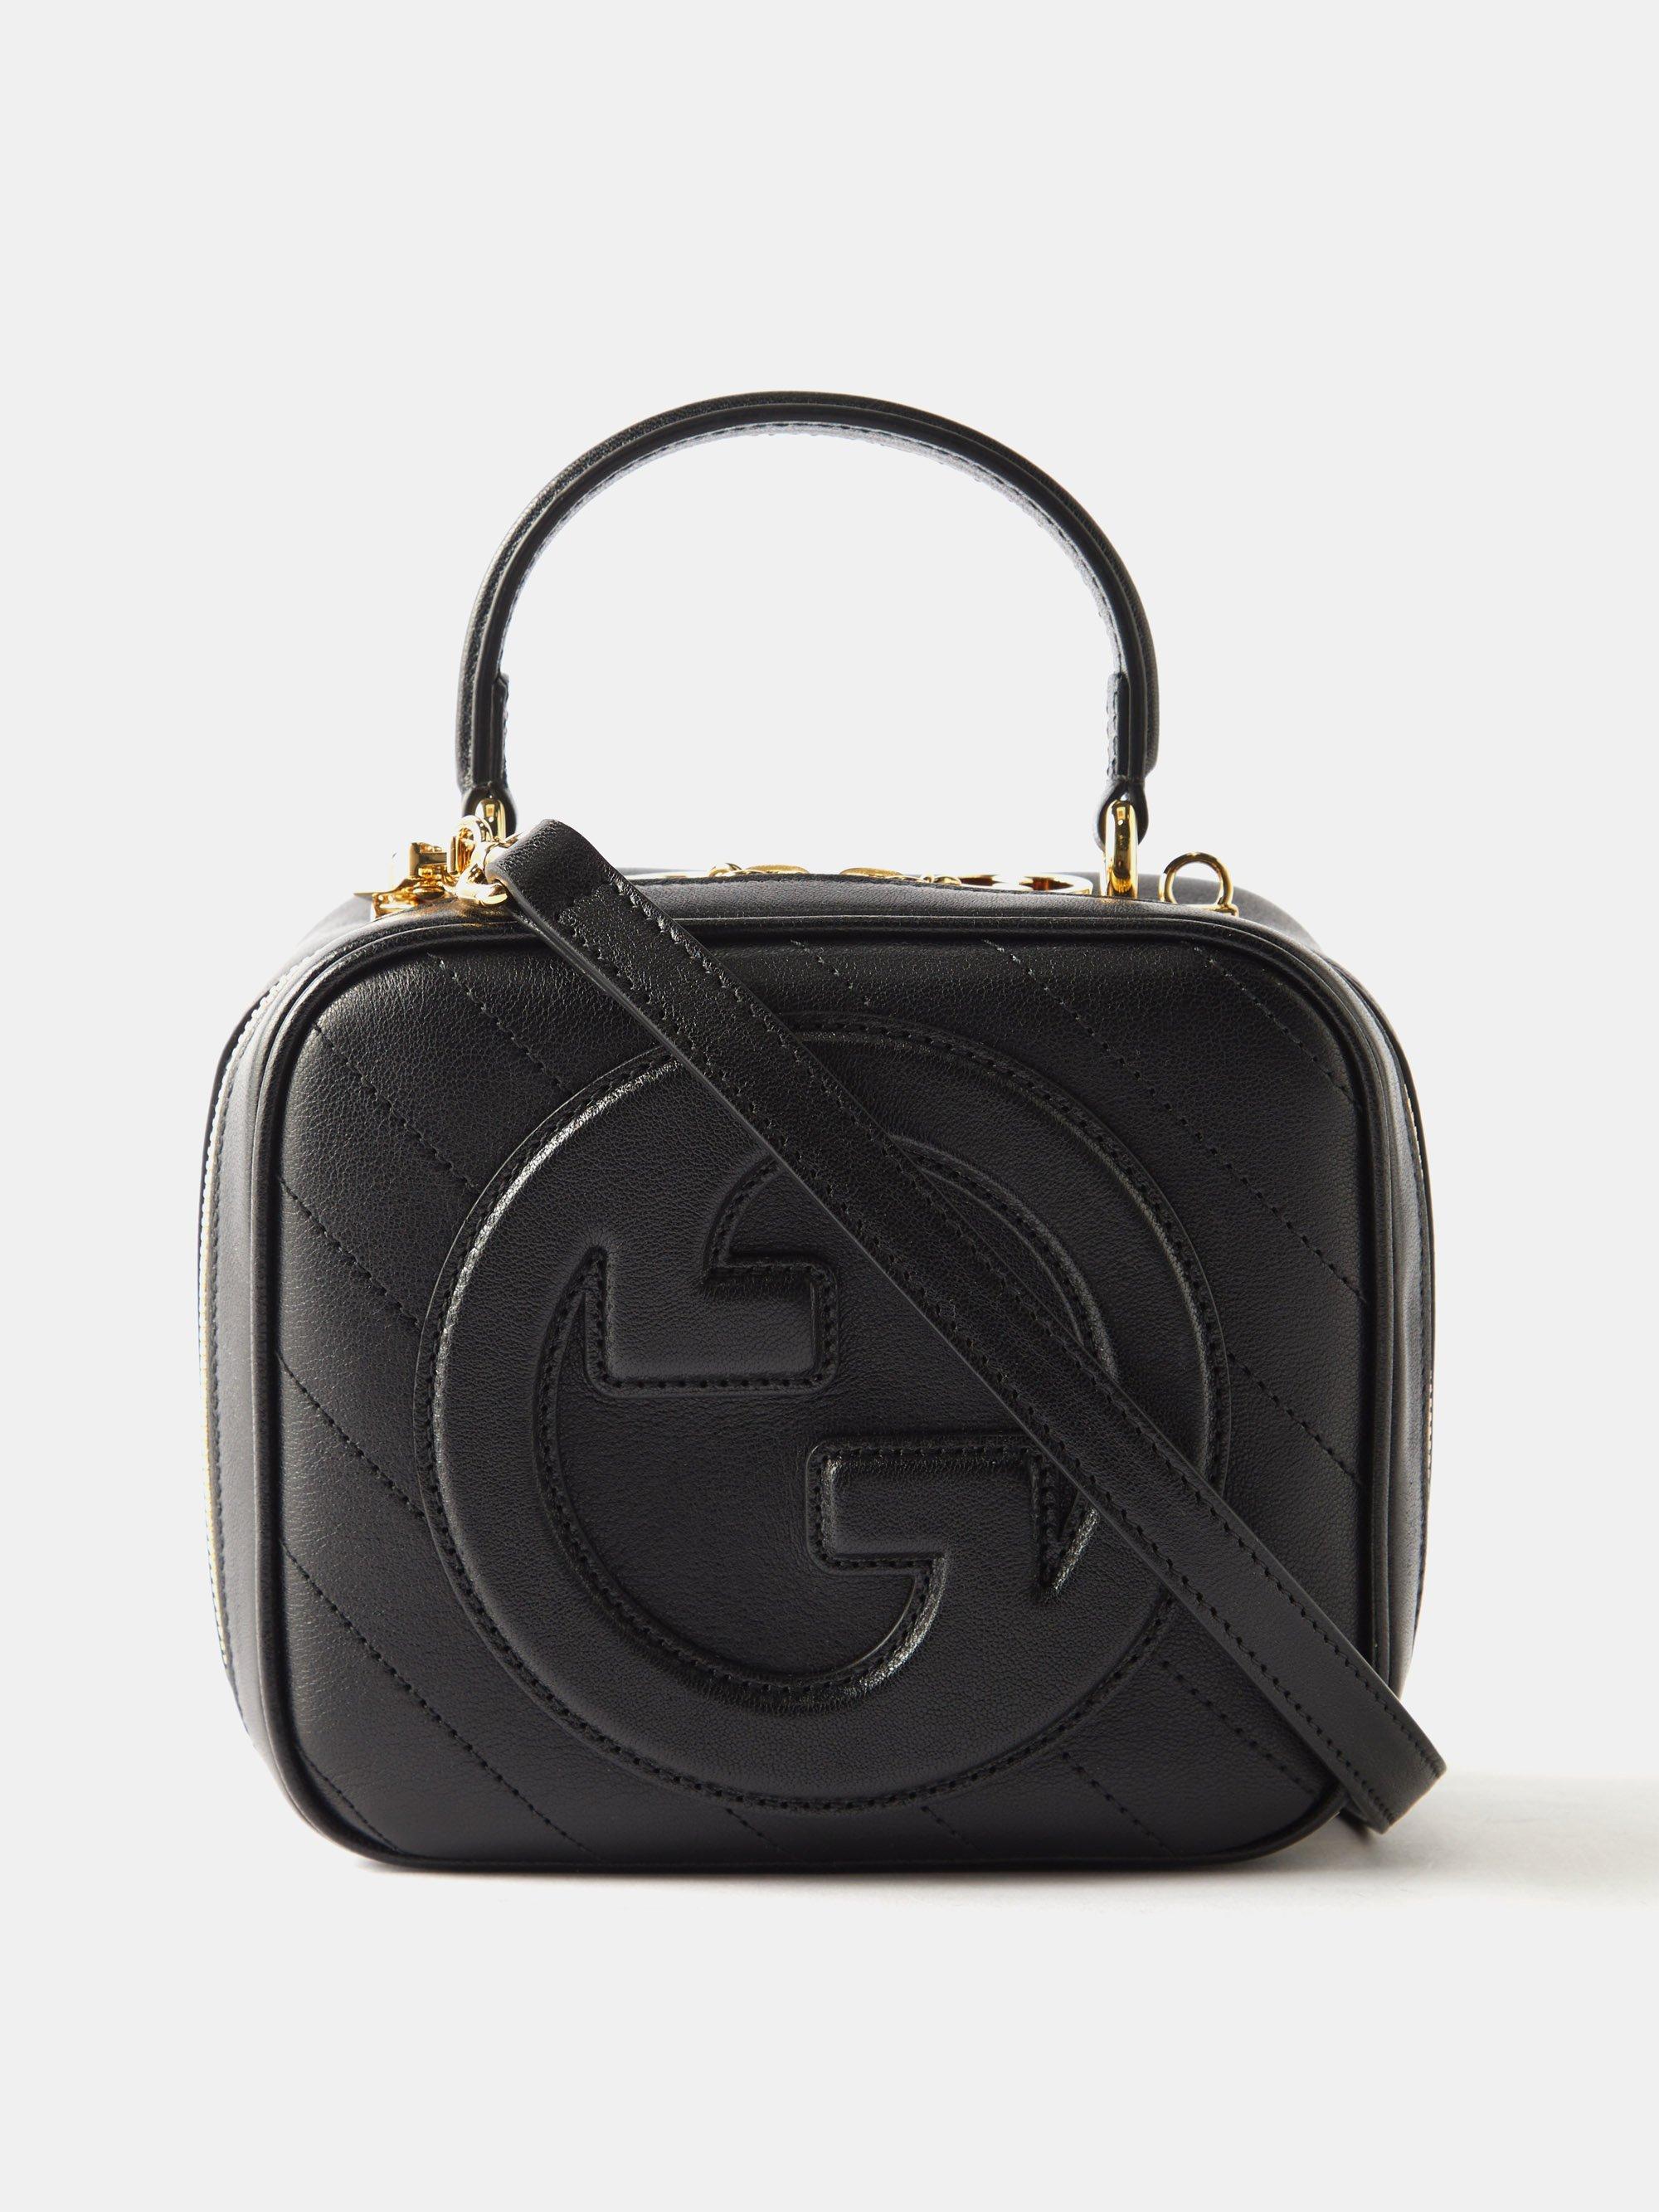 Gucci Blondie Leather Handbag in Black | Lyst